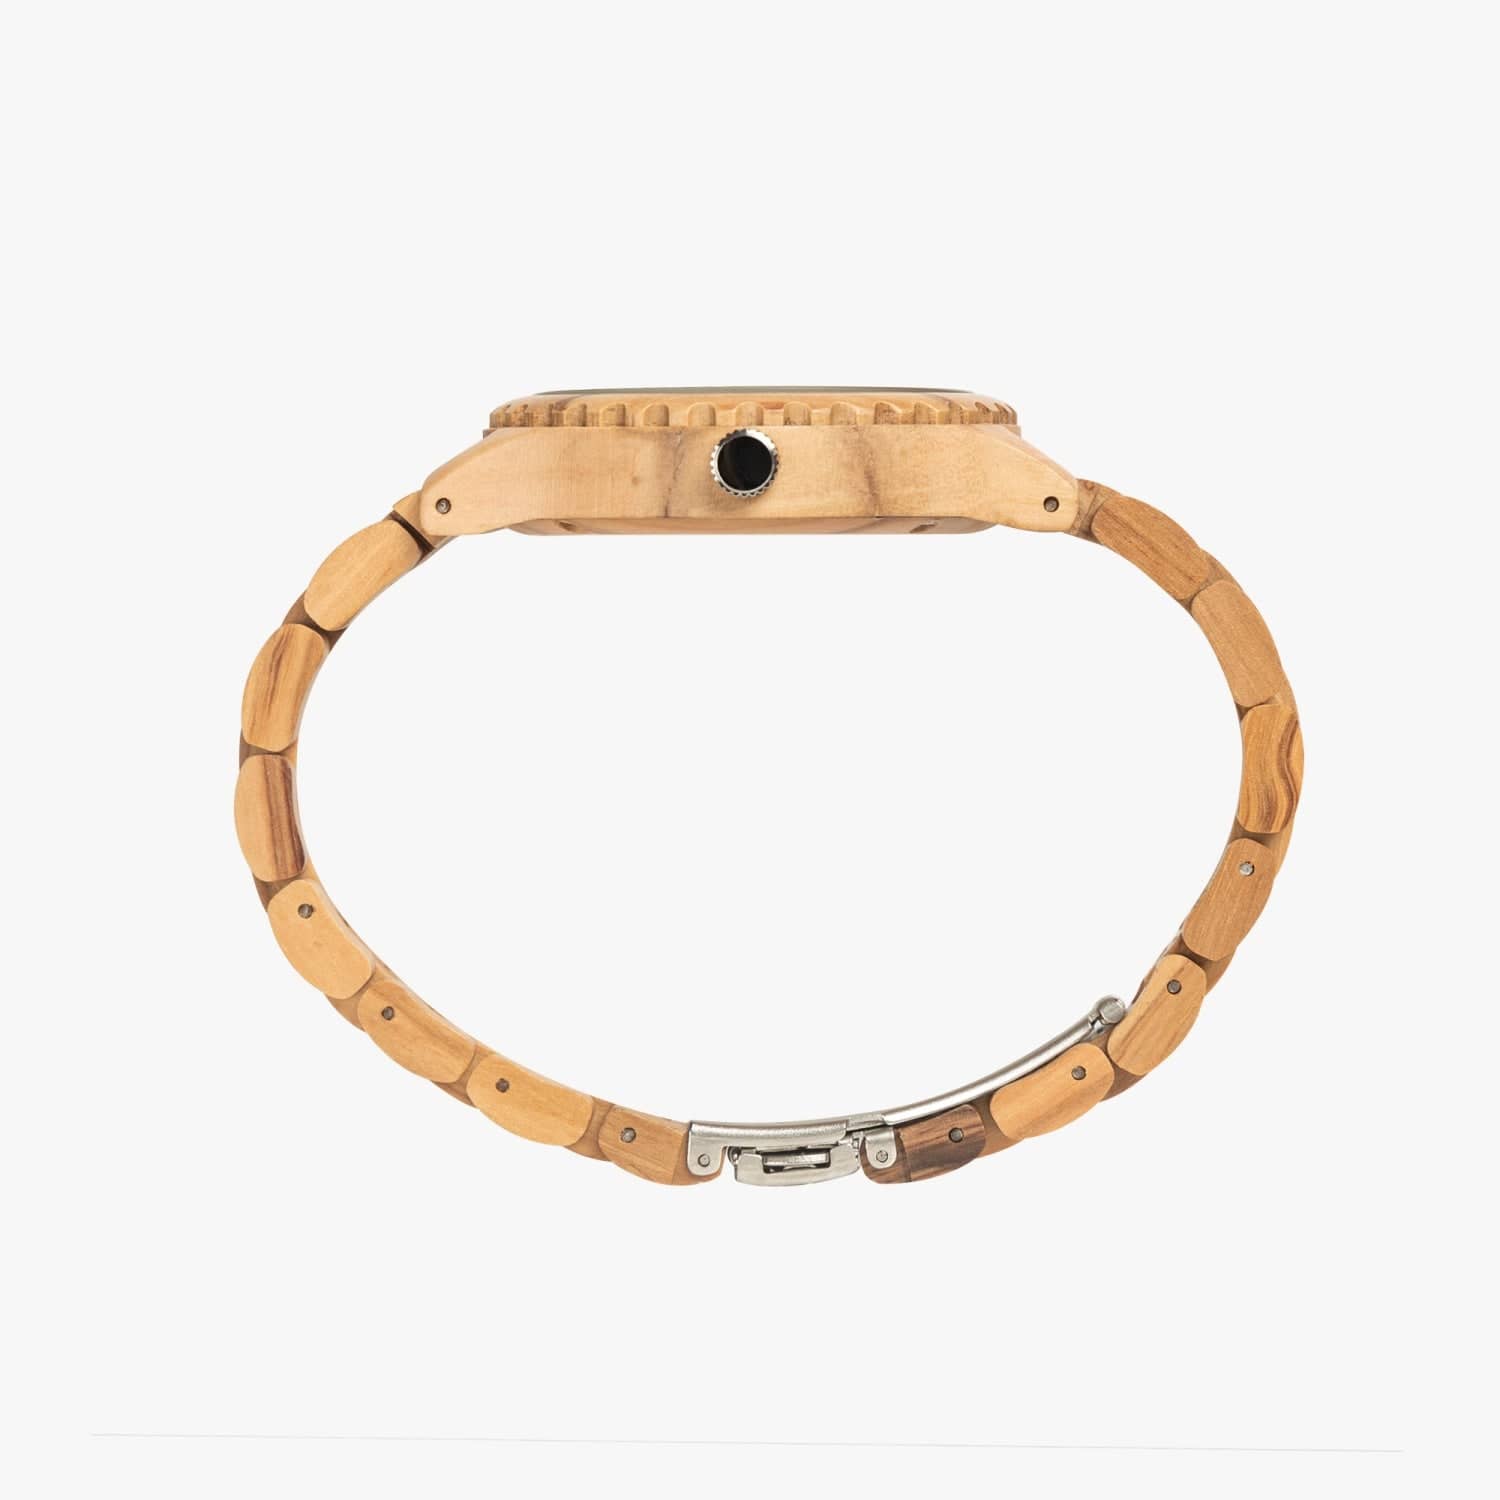 Lily Pond.  Italian Olive Lumber Wooden Watch,. Designer watch by Ingrid Hütten